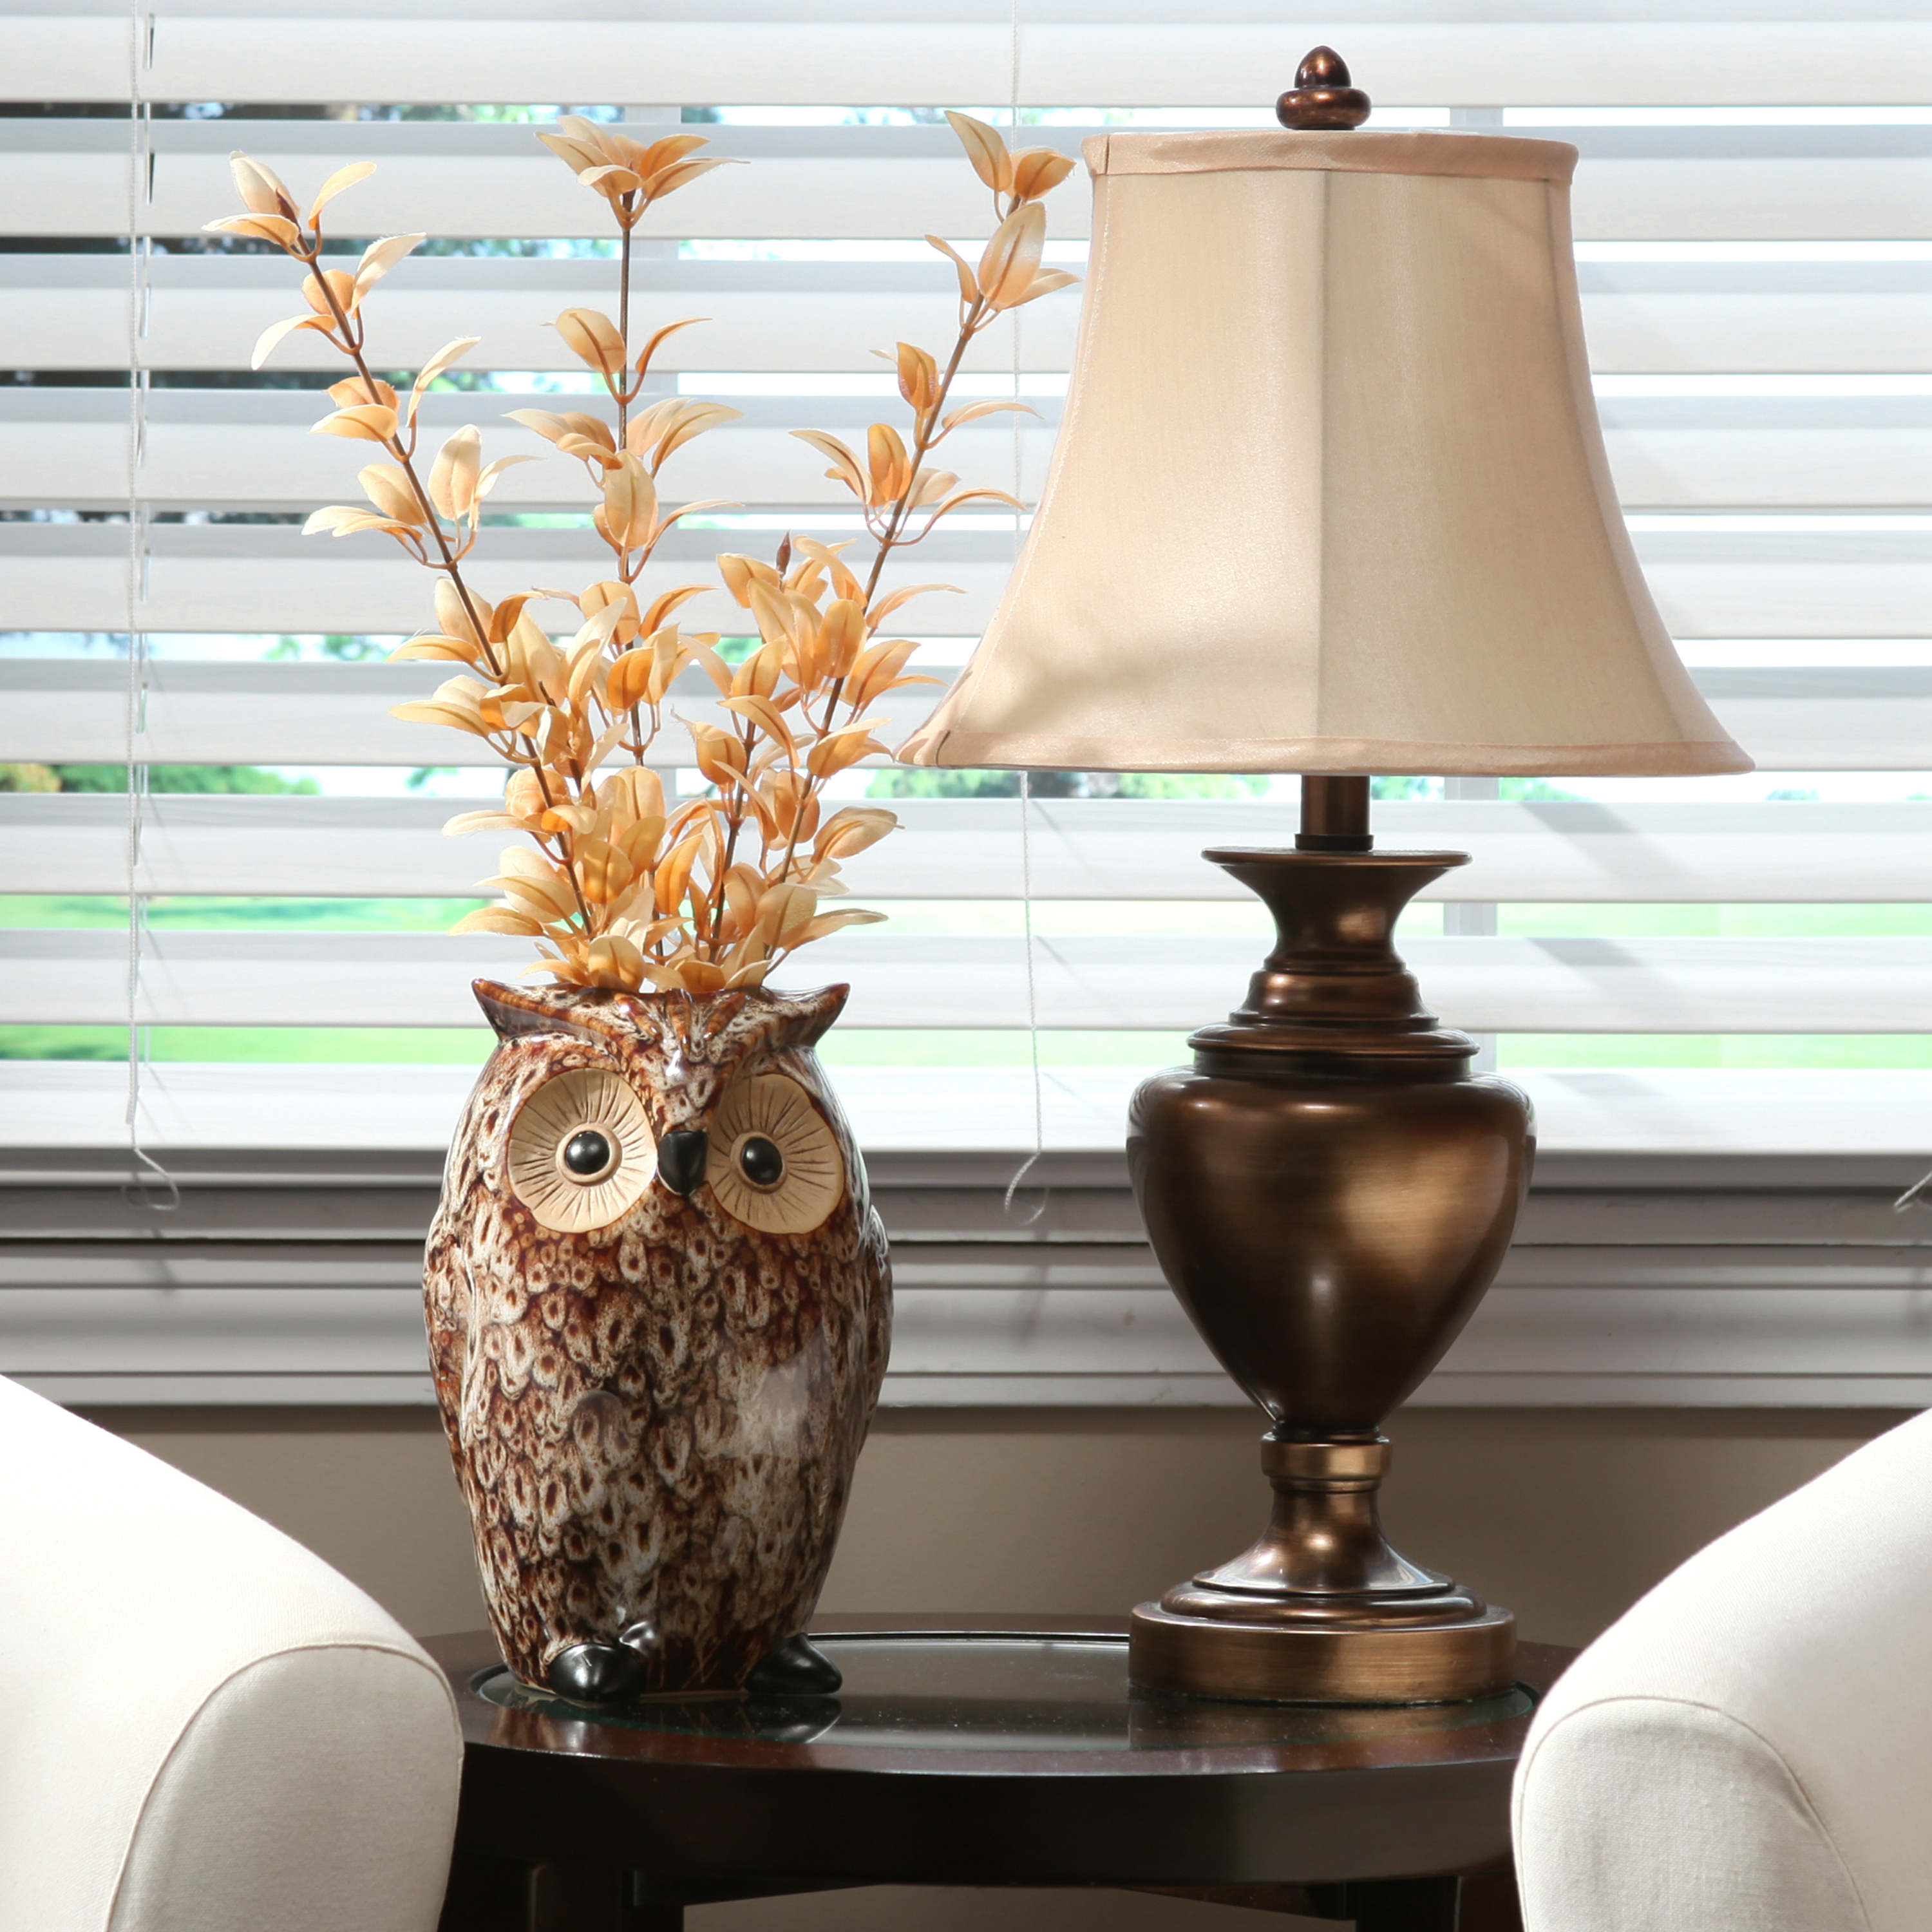 Hosley Ceramic Owl Vase, Brown - image 2 of 2